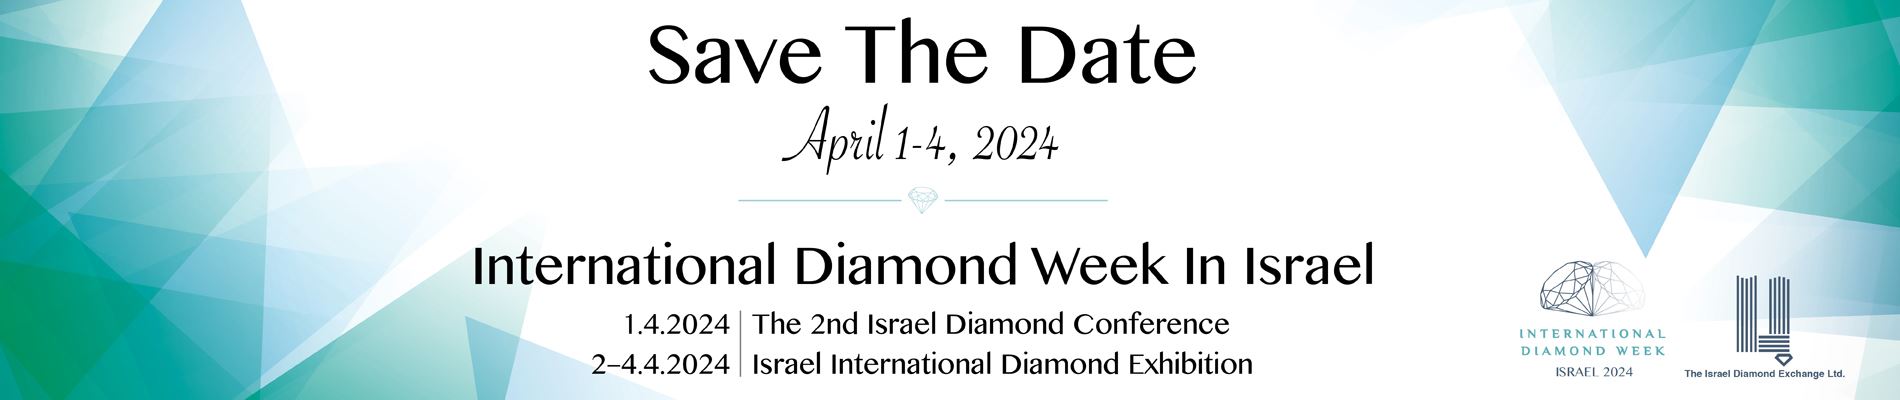 international diamond week 4.2023